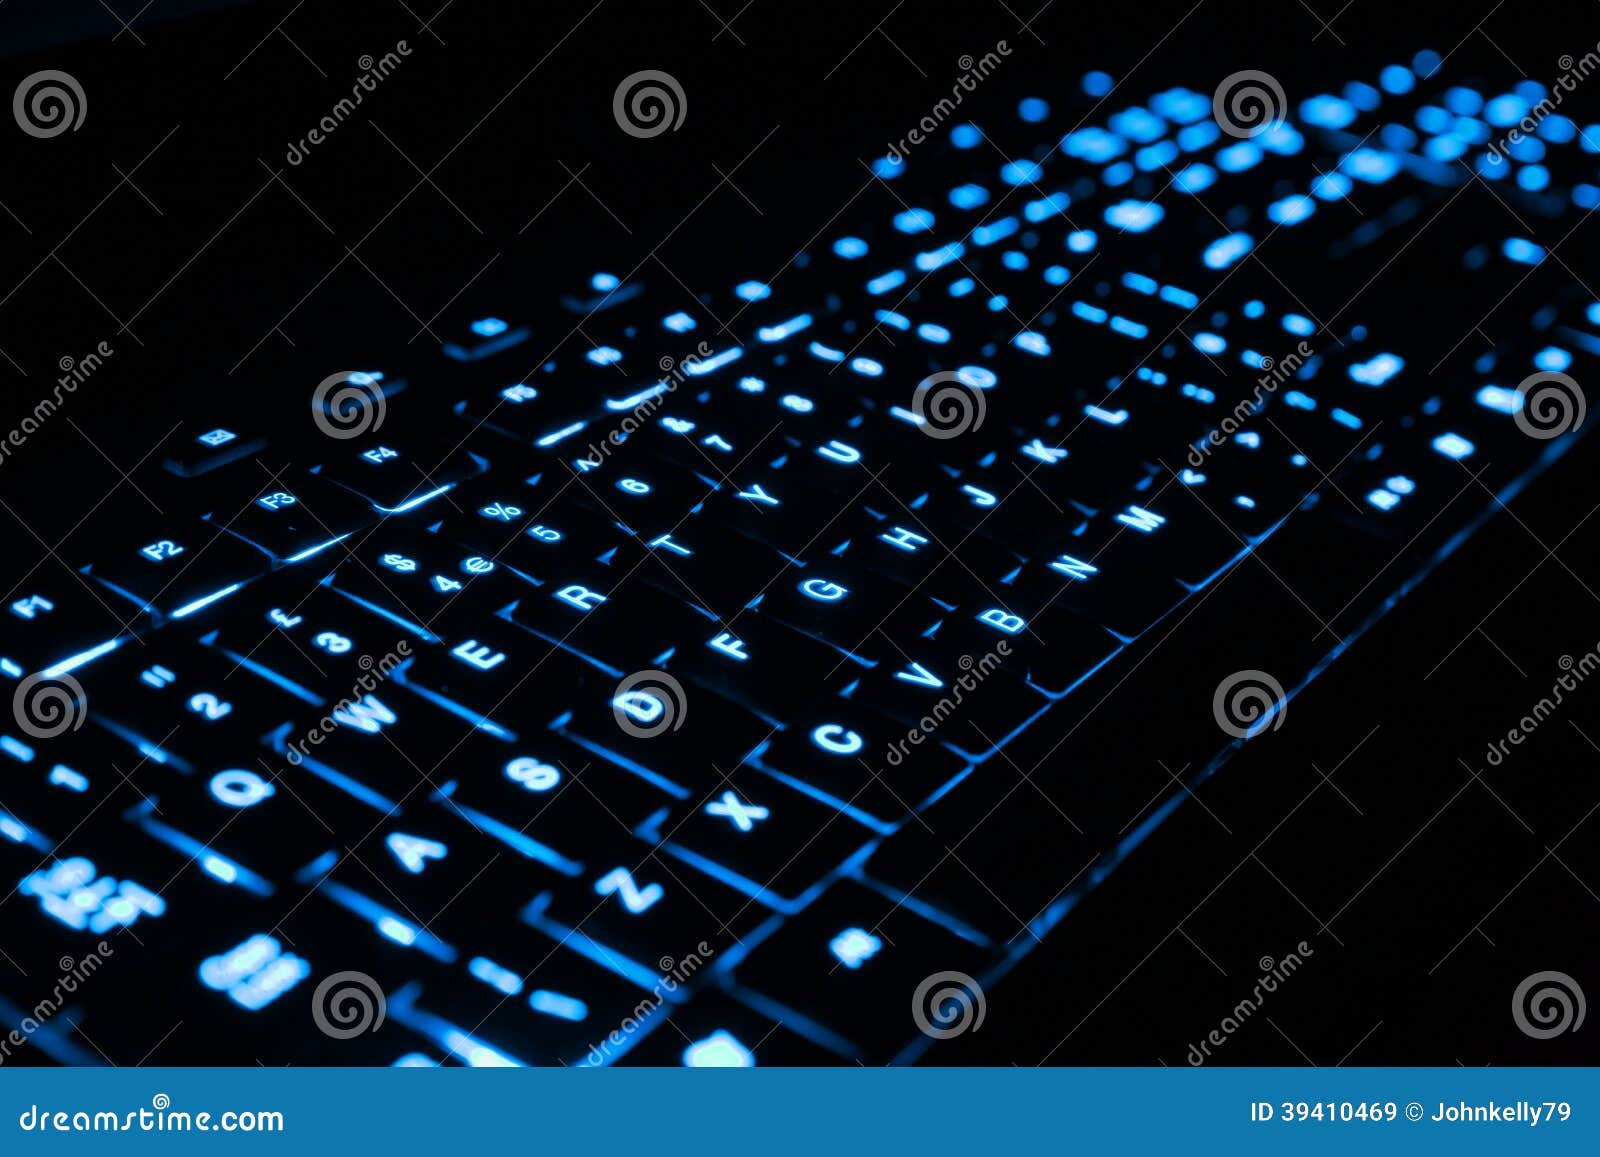 modern backlit keyboard